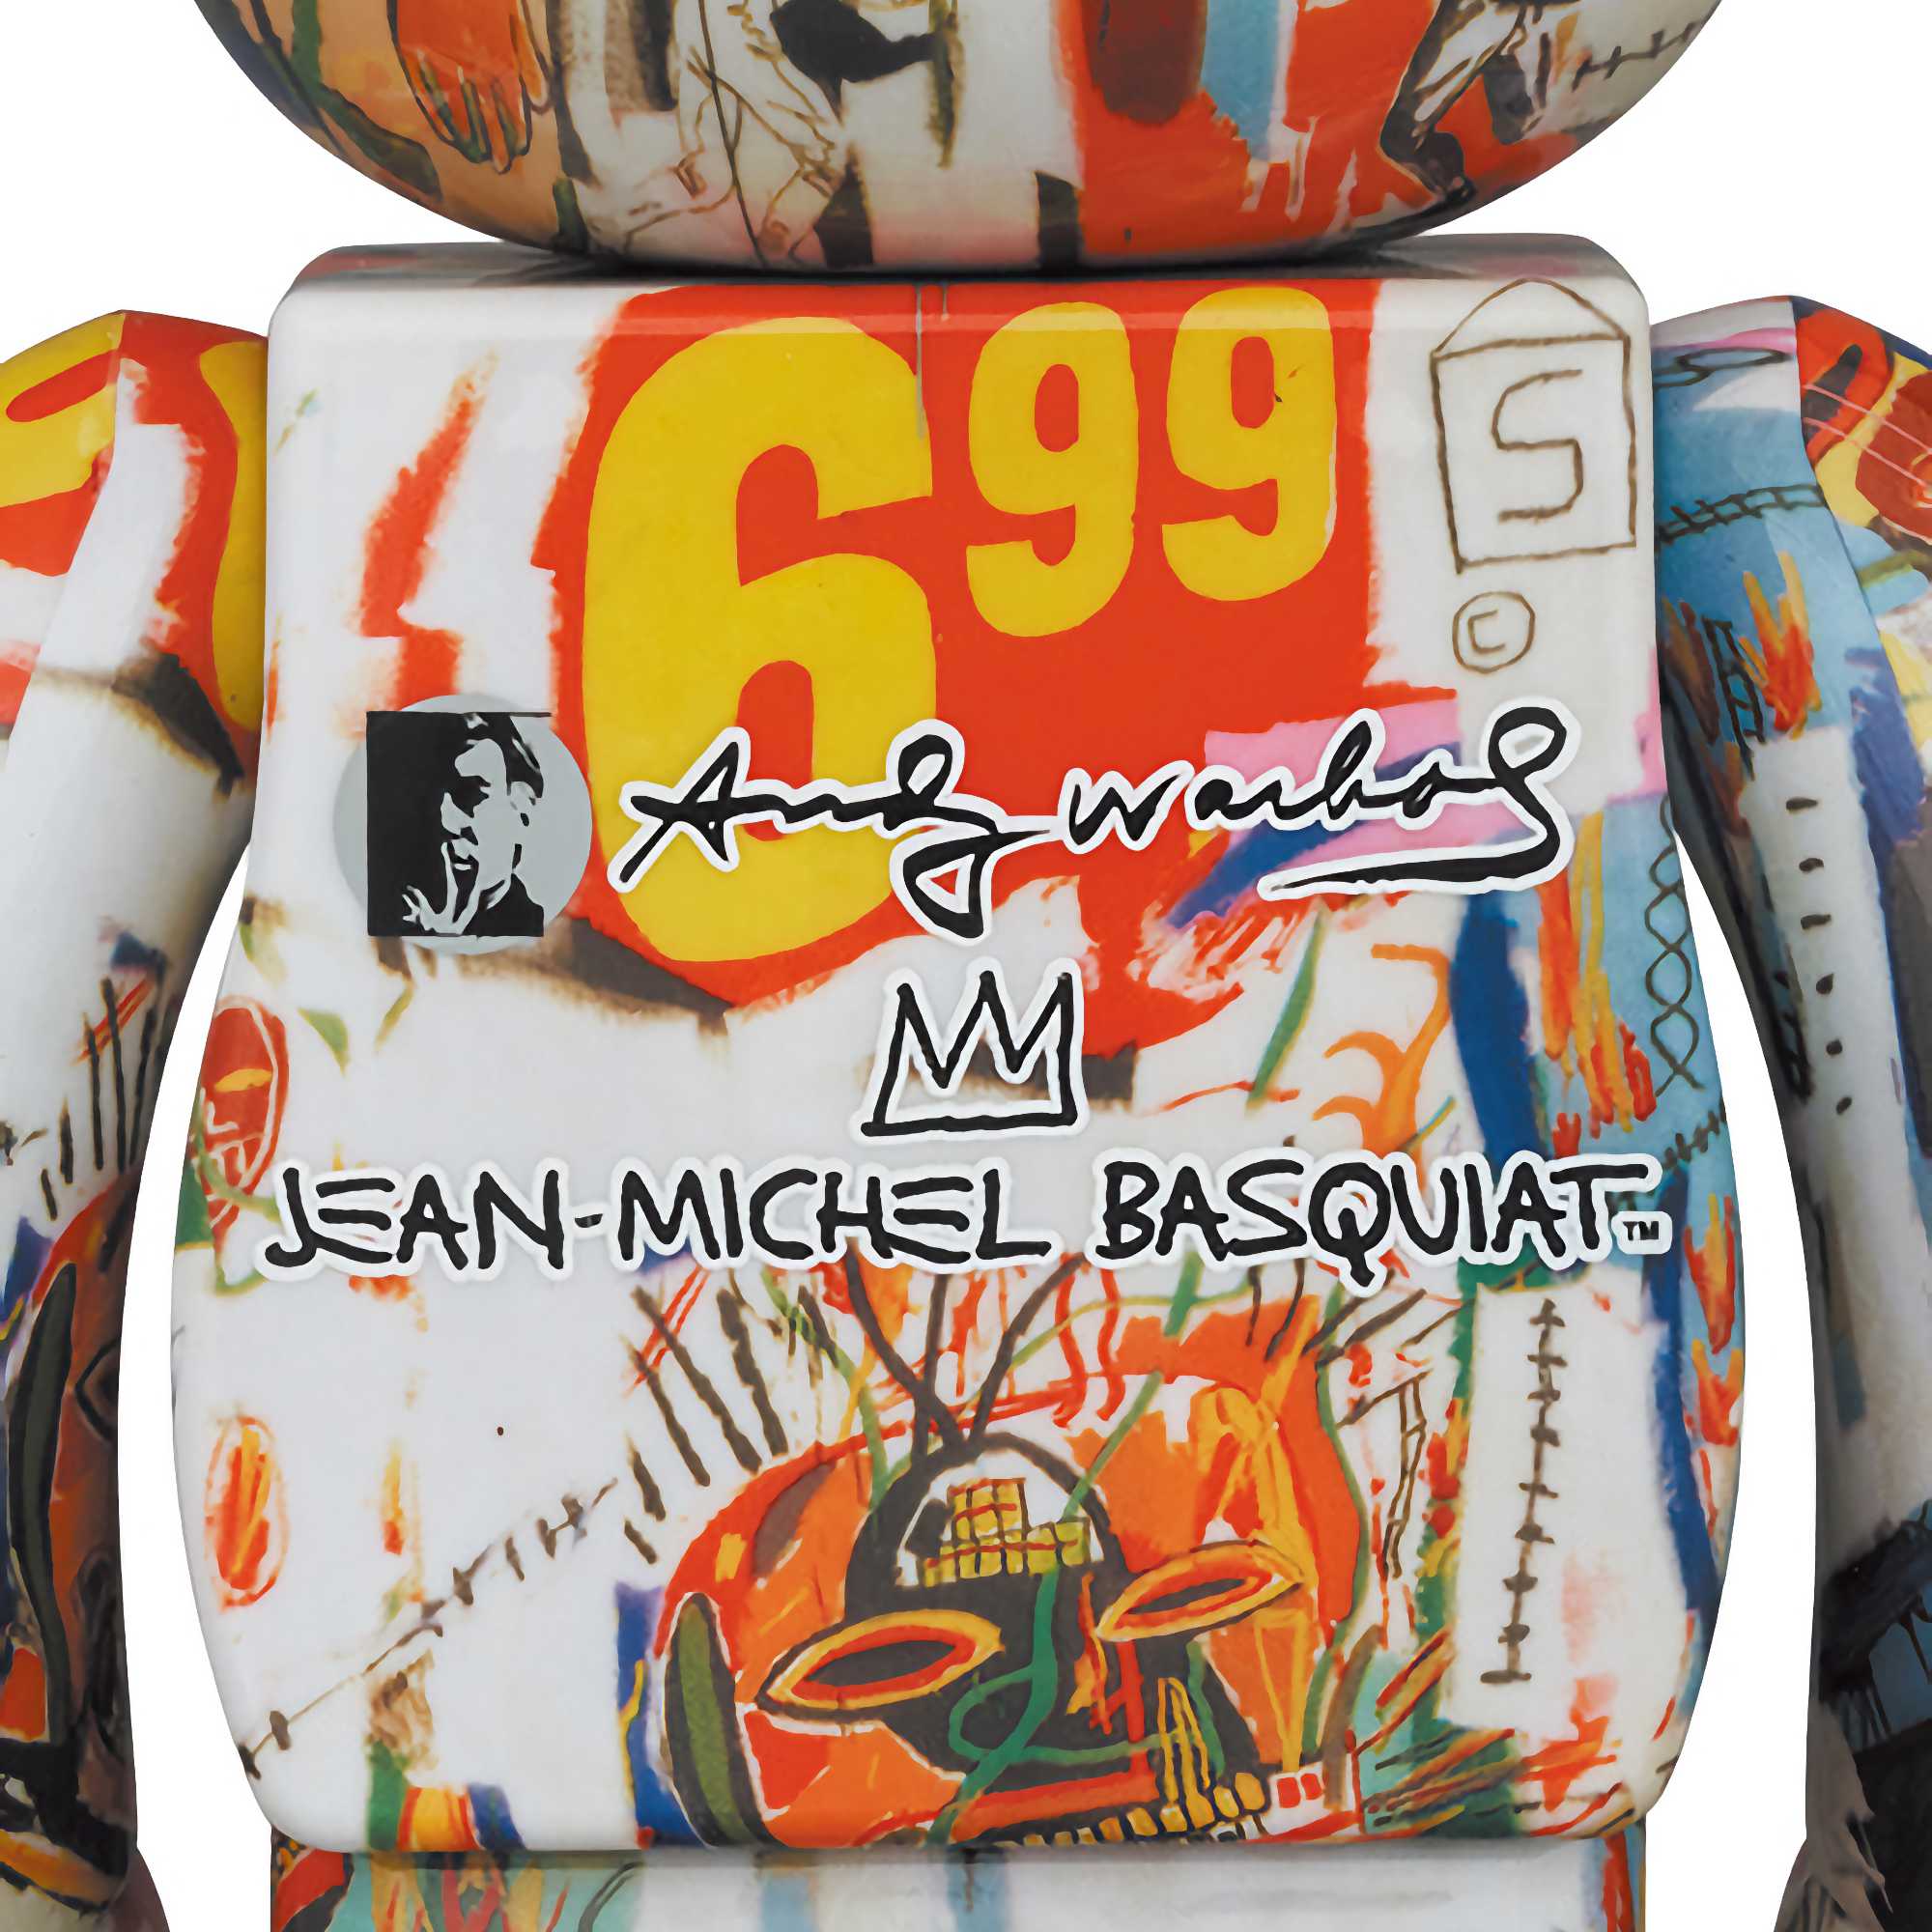 BE@RBRICK Andy Warhol x JEAN-MICHEL BASQUIAT #4 400% | HOMELESS.hk